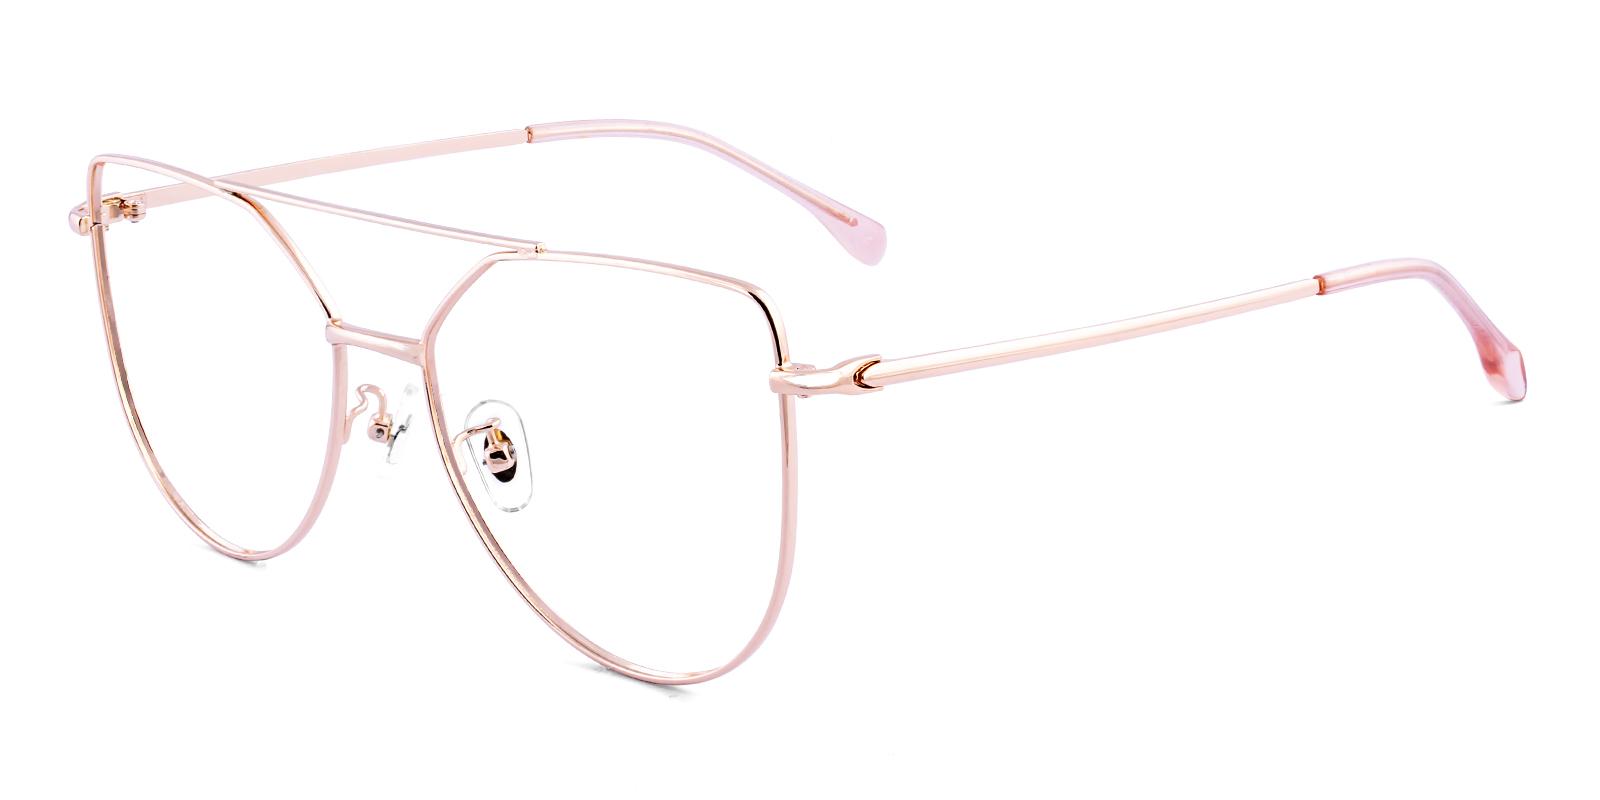 Opoit Rosegold Metal Eyeglasses , NosePads Frames from ABBE Glasses